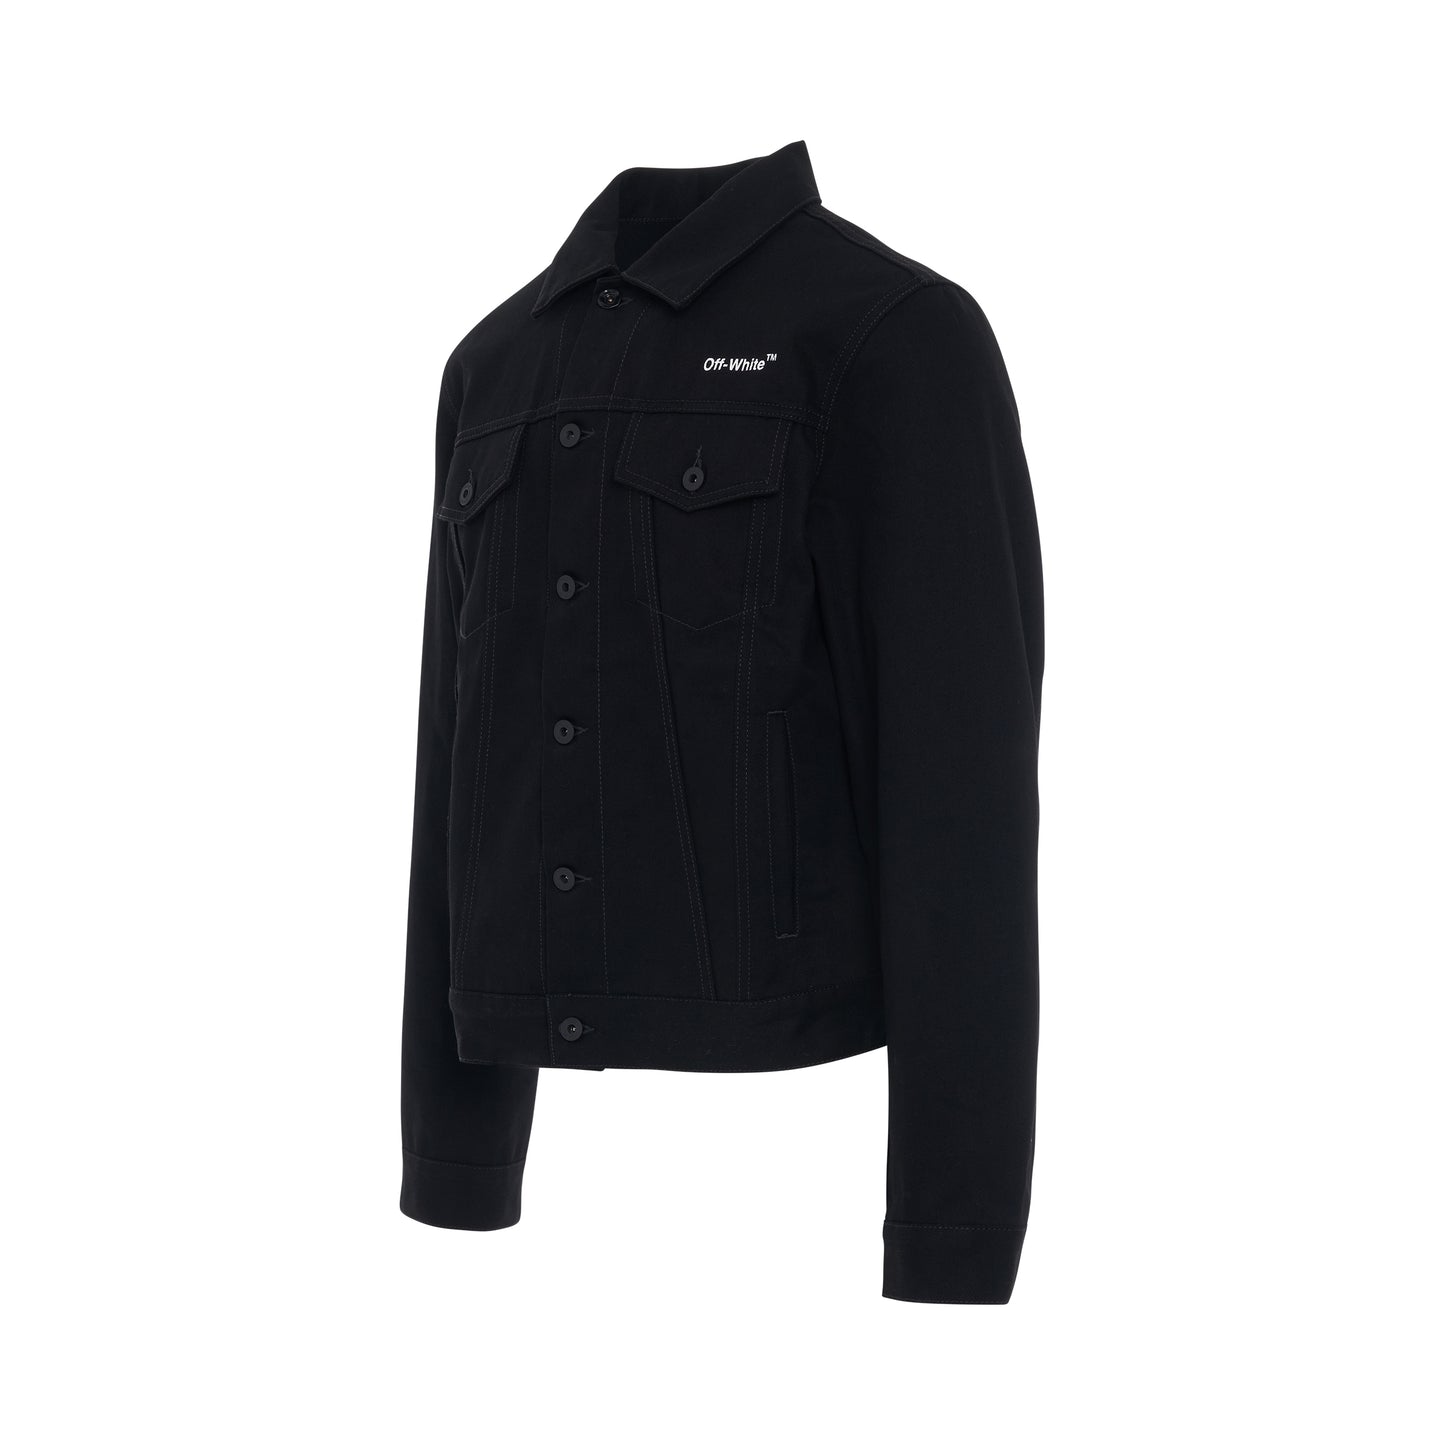 Diagonal Tab Slim Fit Denim Jacket in Black/White